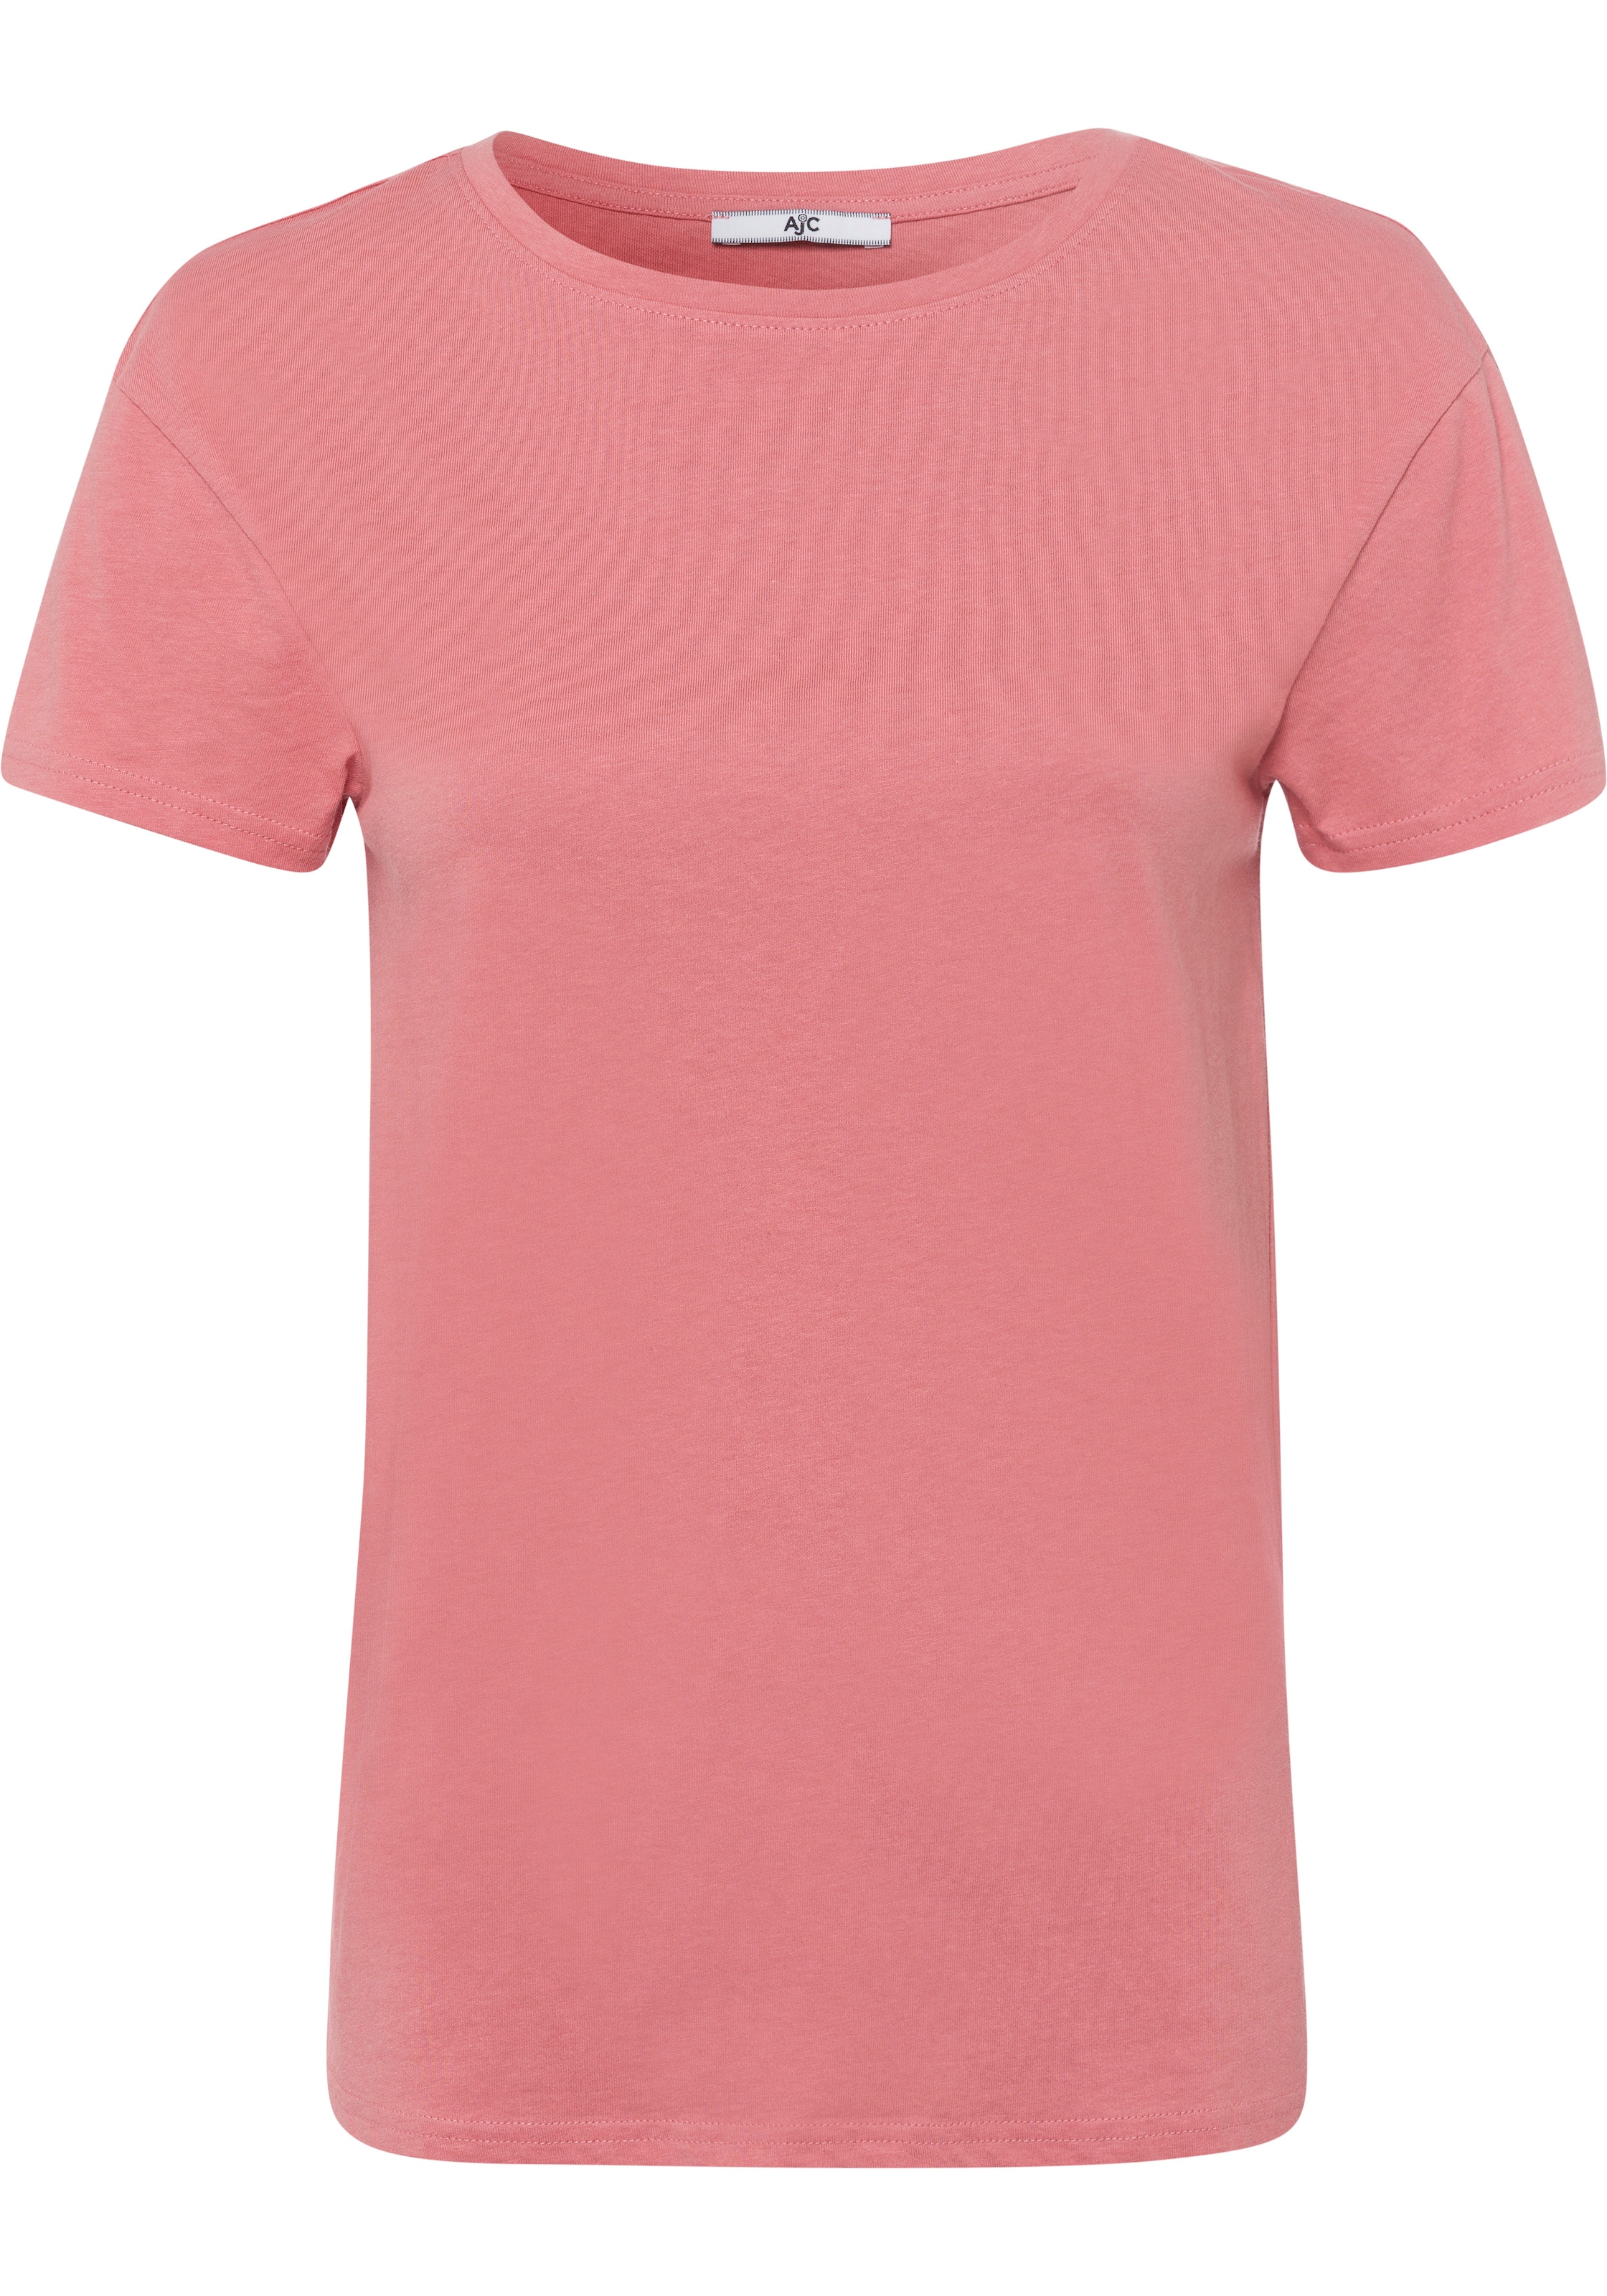 AJC T-Shirt, im trendigen online KOLLEKTION bestellen NEUE Oversized-Look Jelmoli-Versand - Schweiz bei